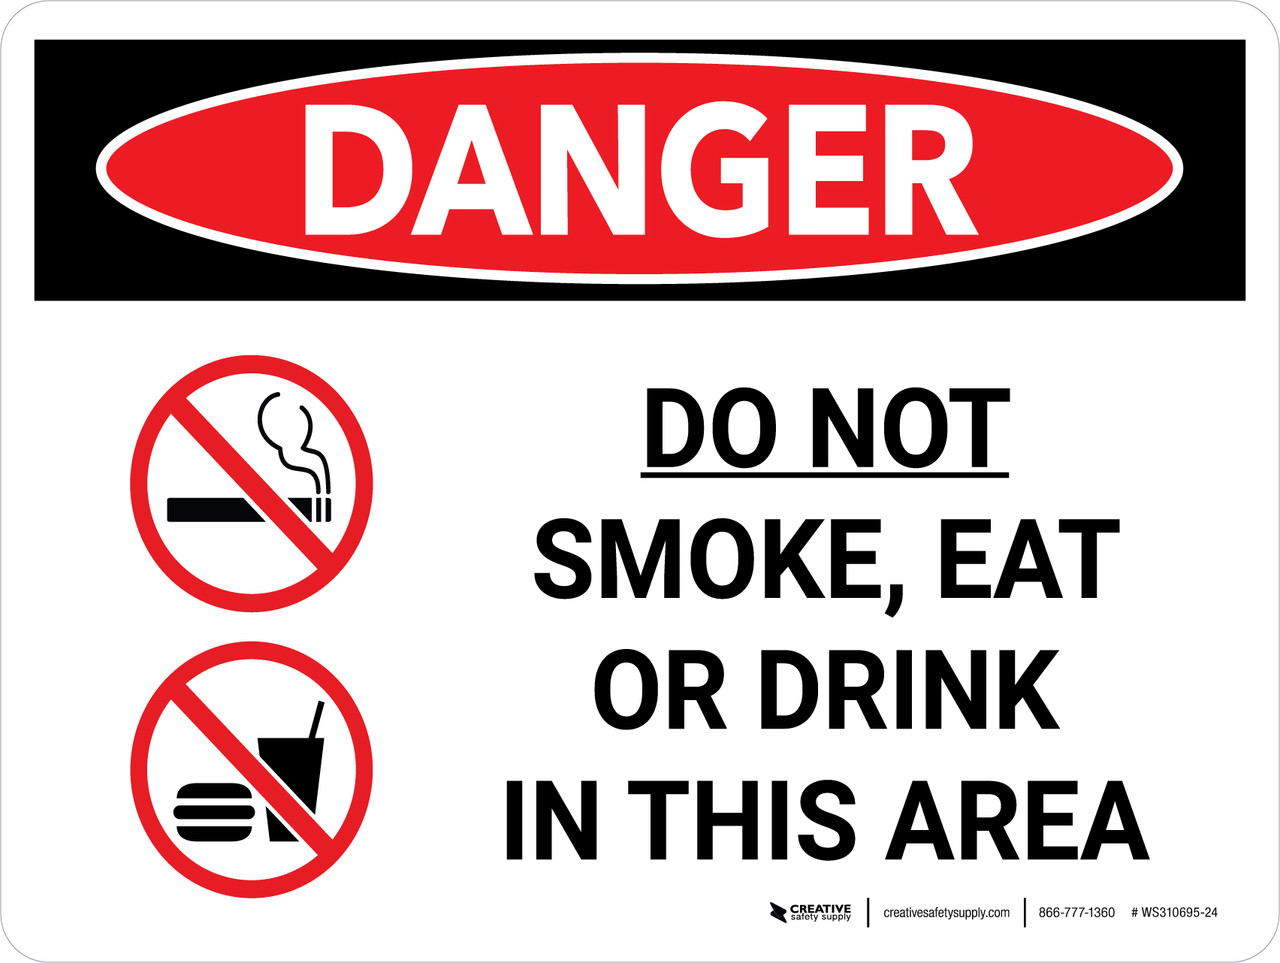 dont smoke sign